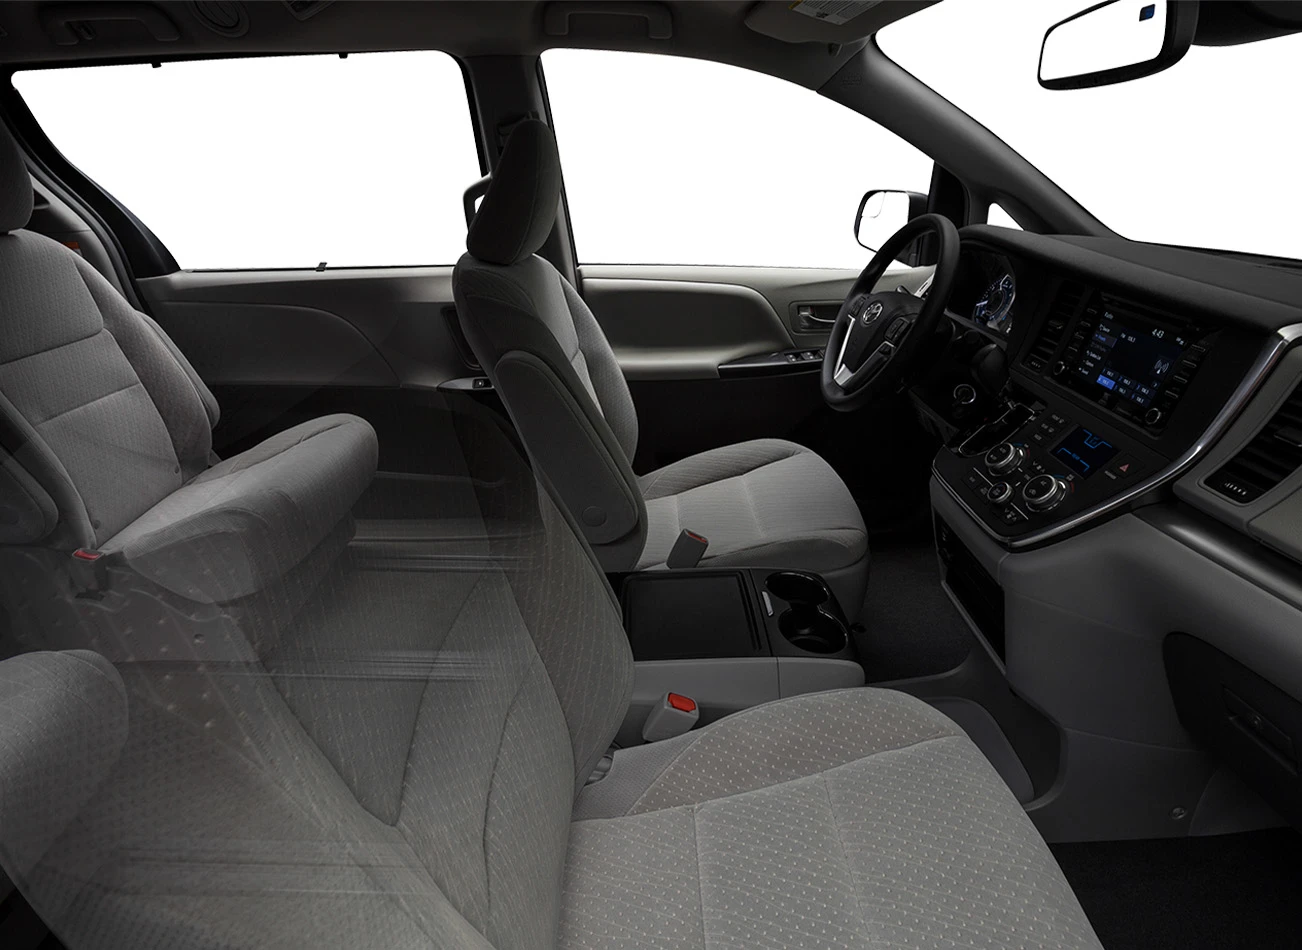 2020 Toyota Sienna: Driver seat | CarMax